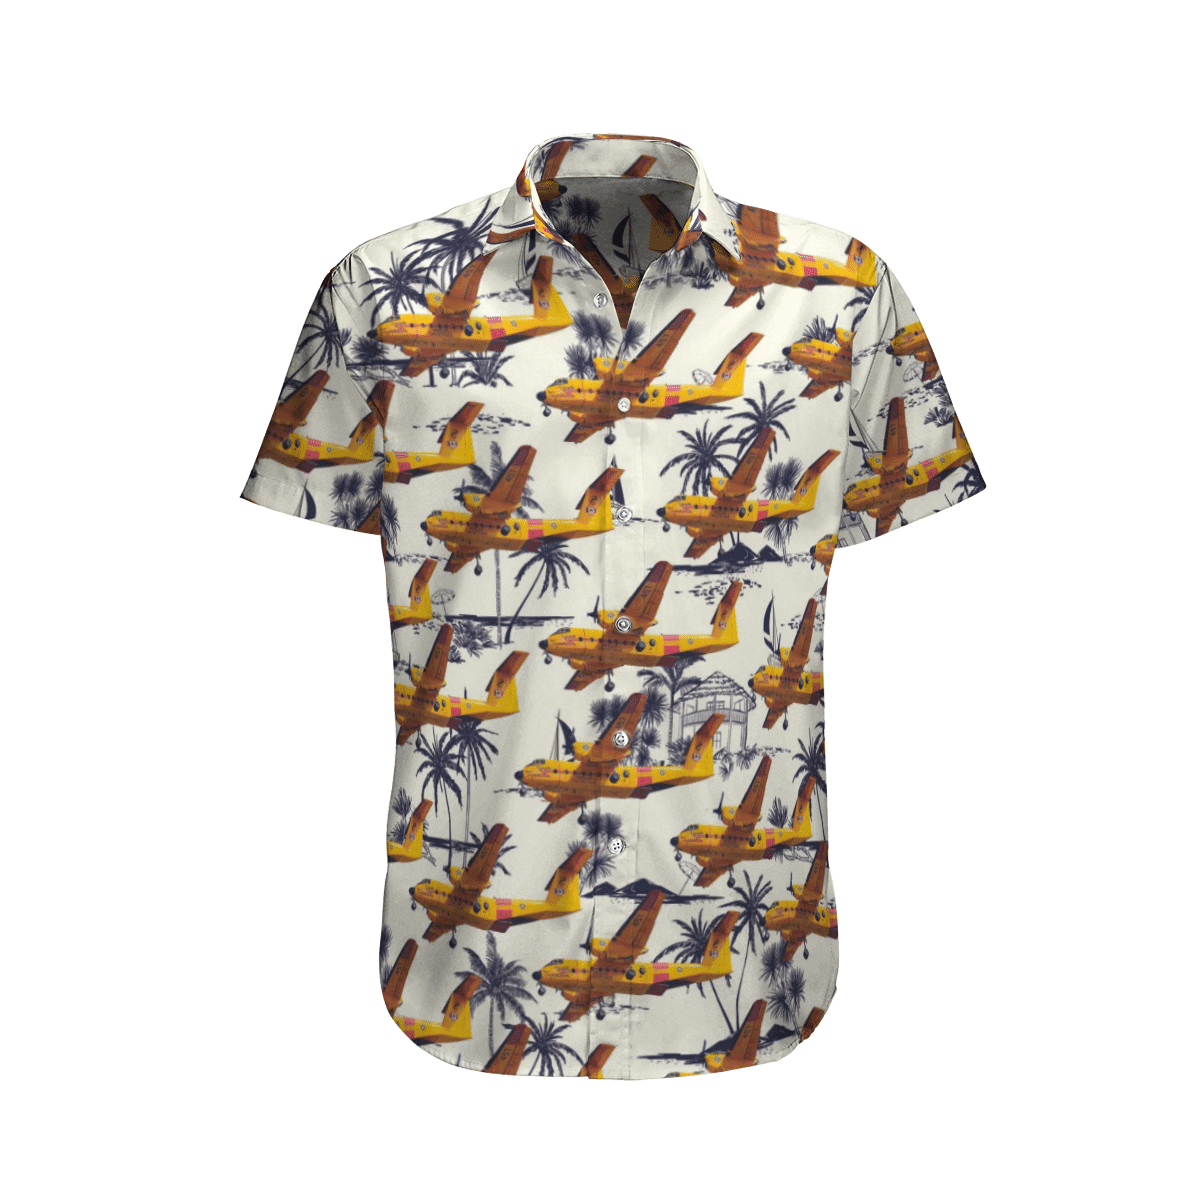 Get a new Hawaiian shirt to enjoy summer vacation 107